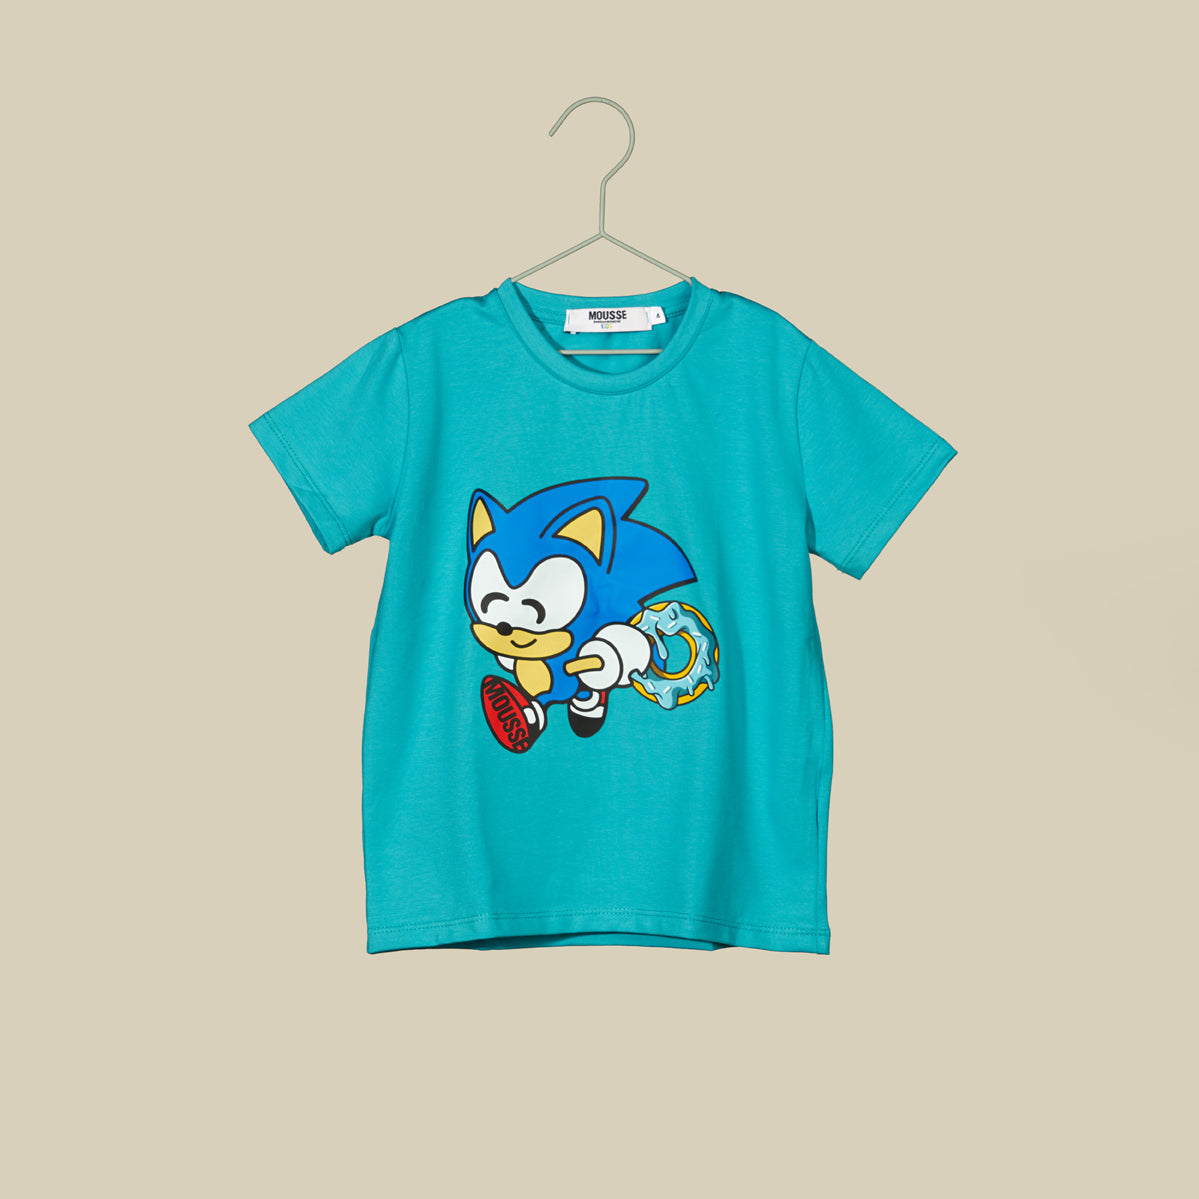 T-shirt turchese Sonic